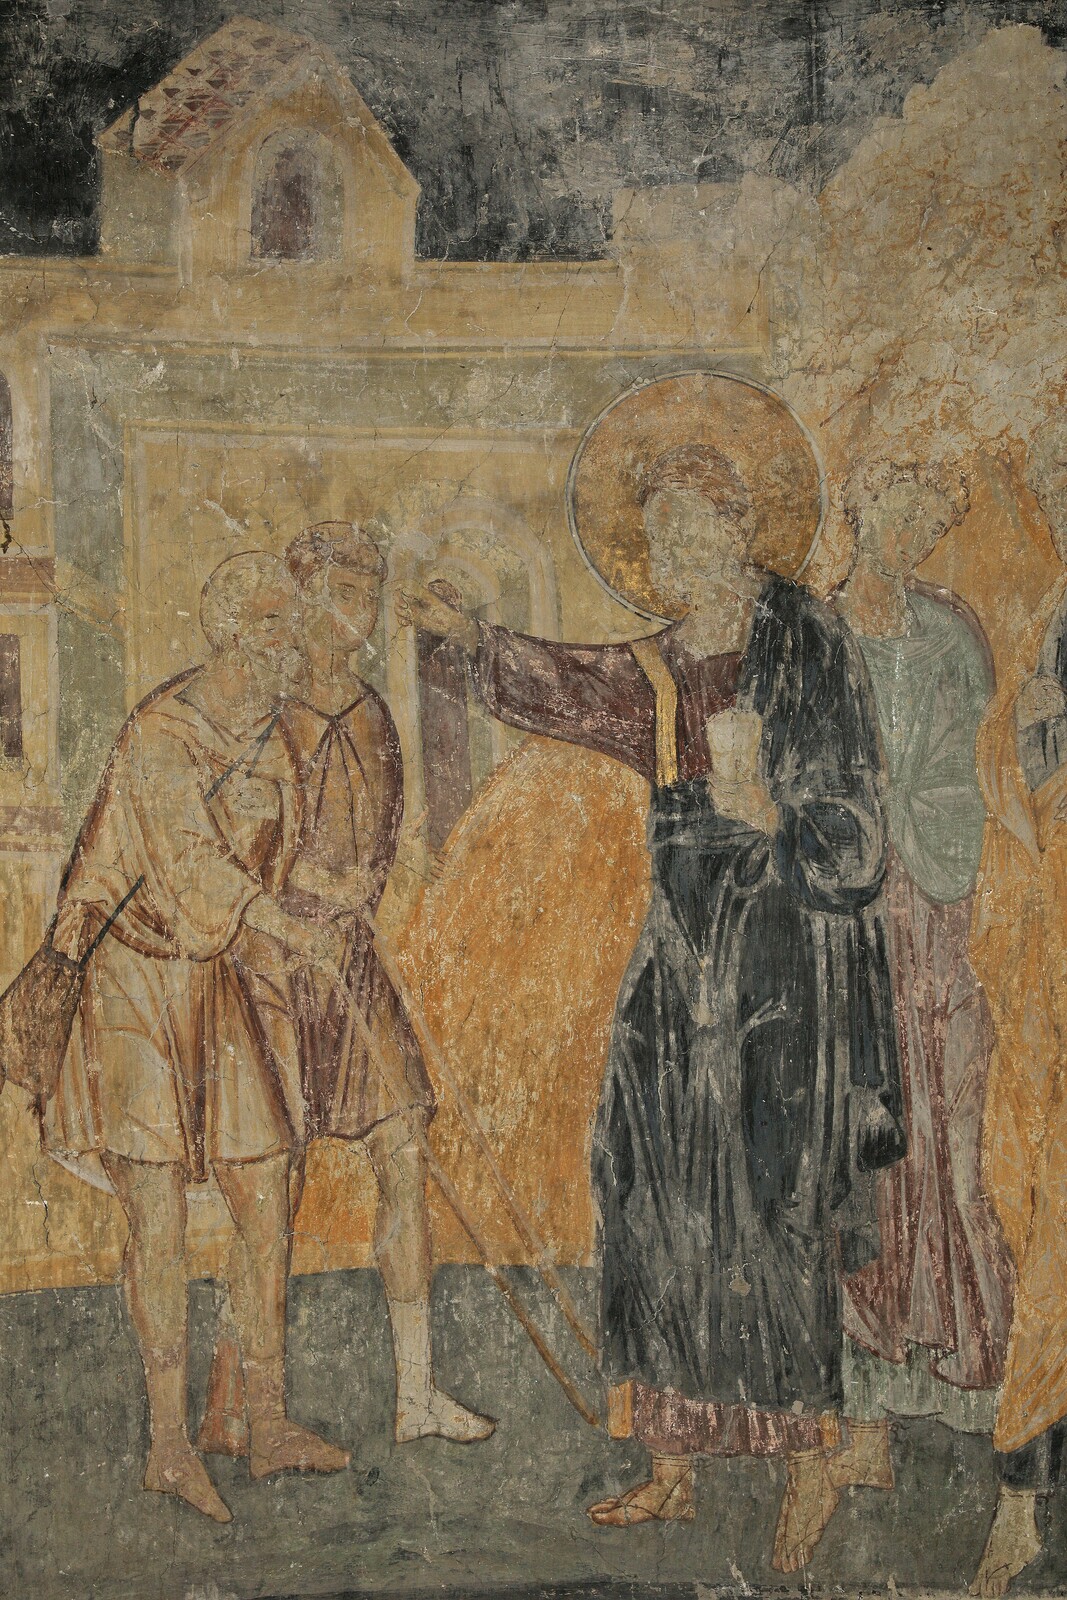 Christ Healing the Blind Mеn, detail